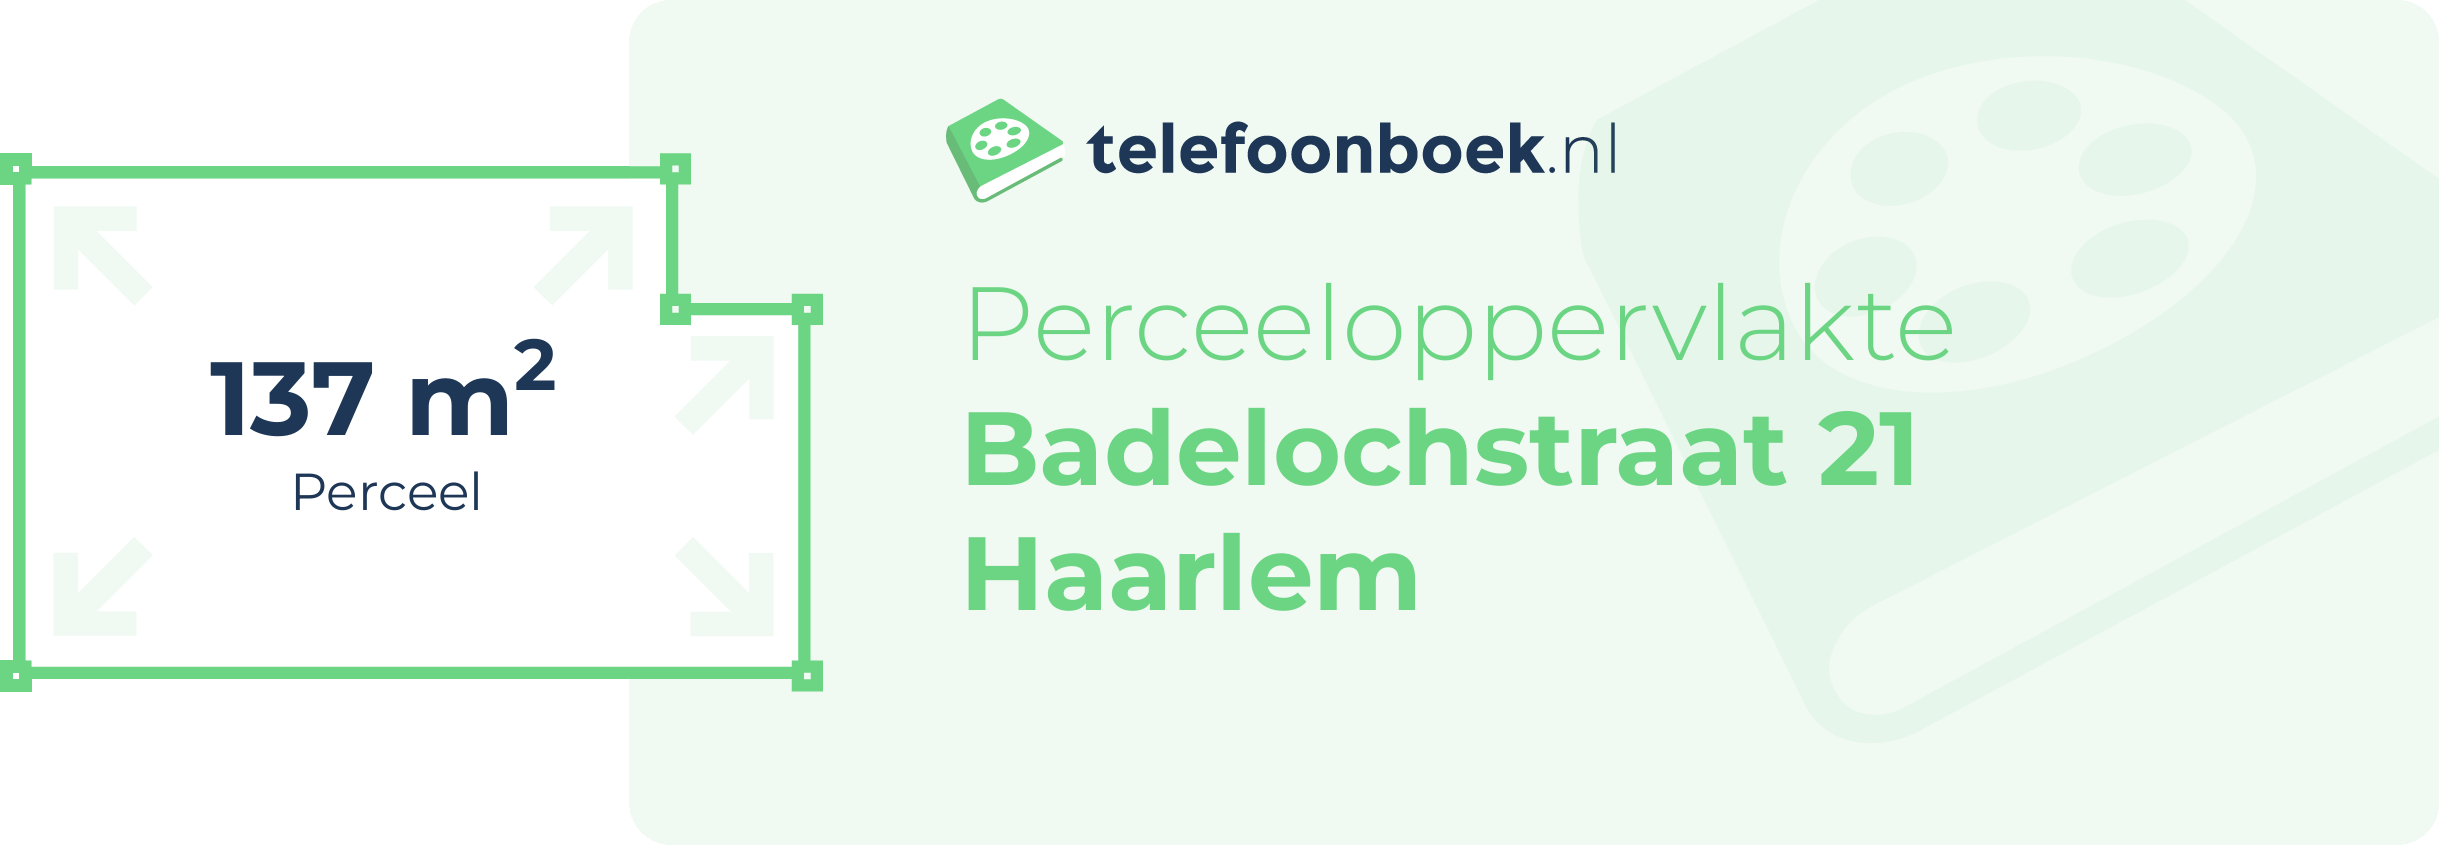 Perceeloppervlakte Badelochstraat 21 Haarlem